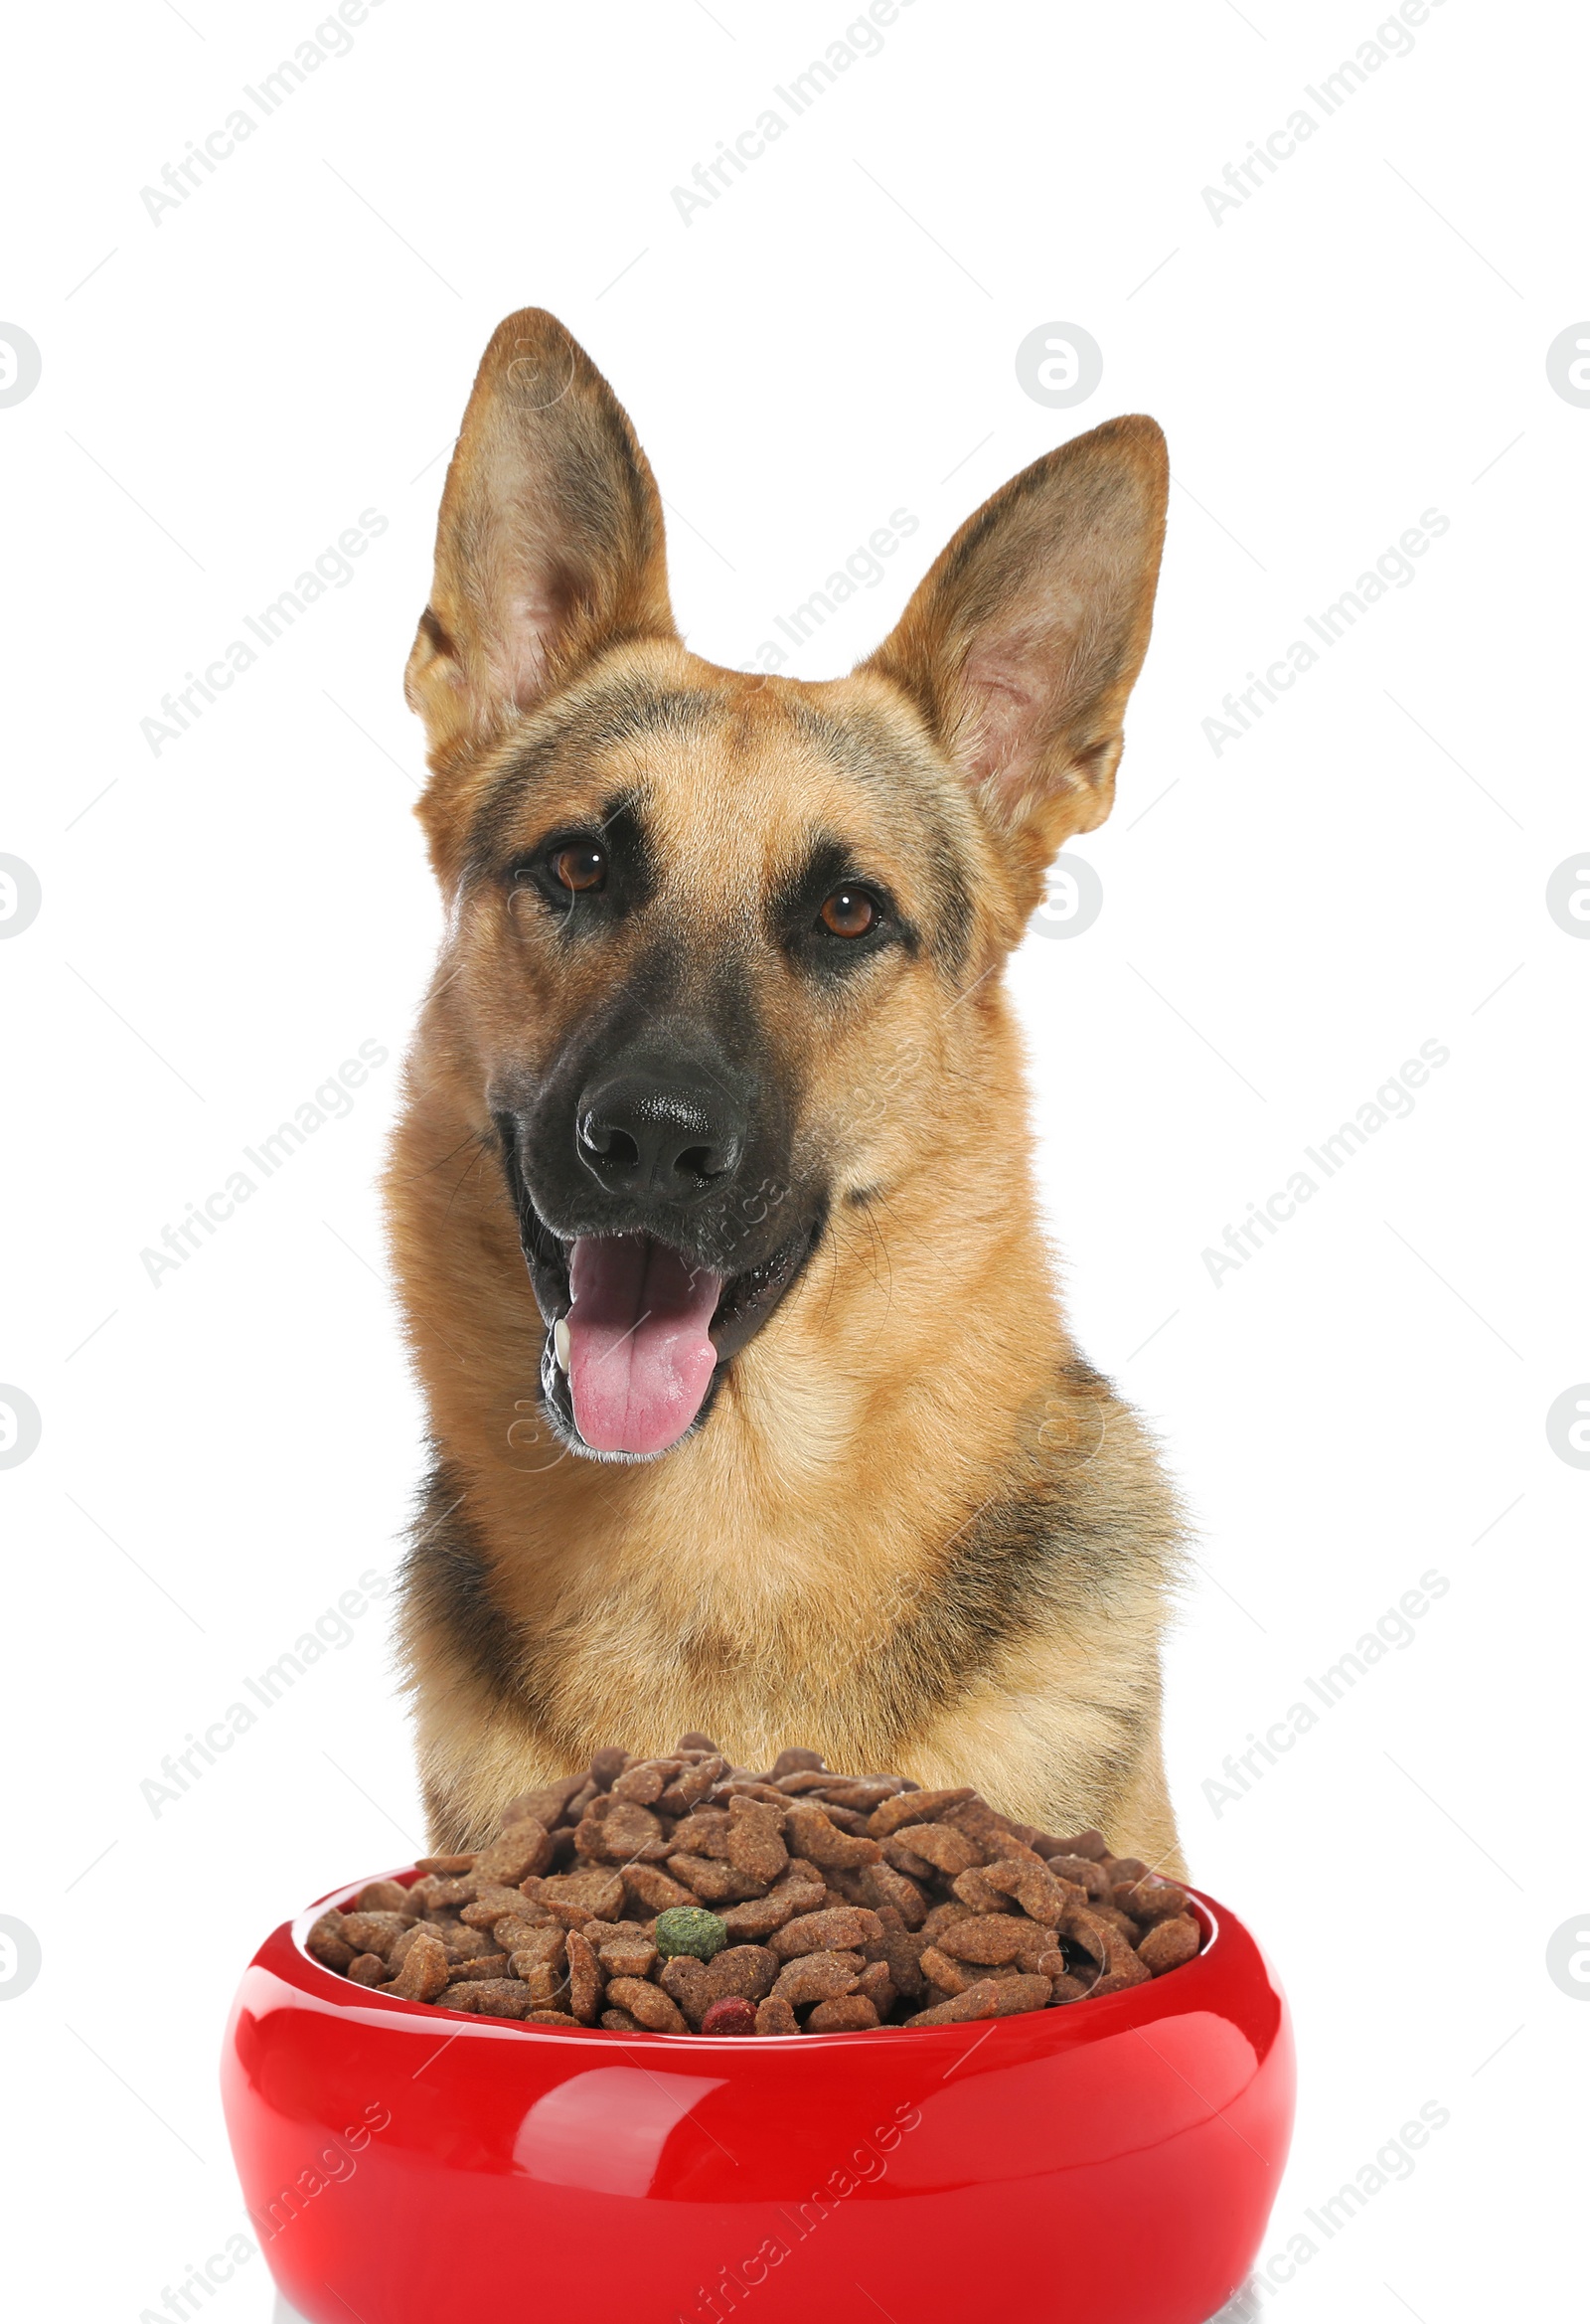 Image of Cute German shepherd dog and feeding bowl on white background